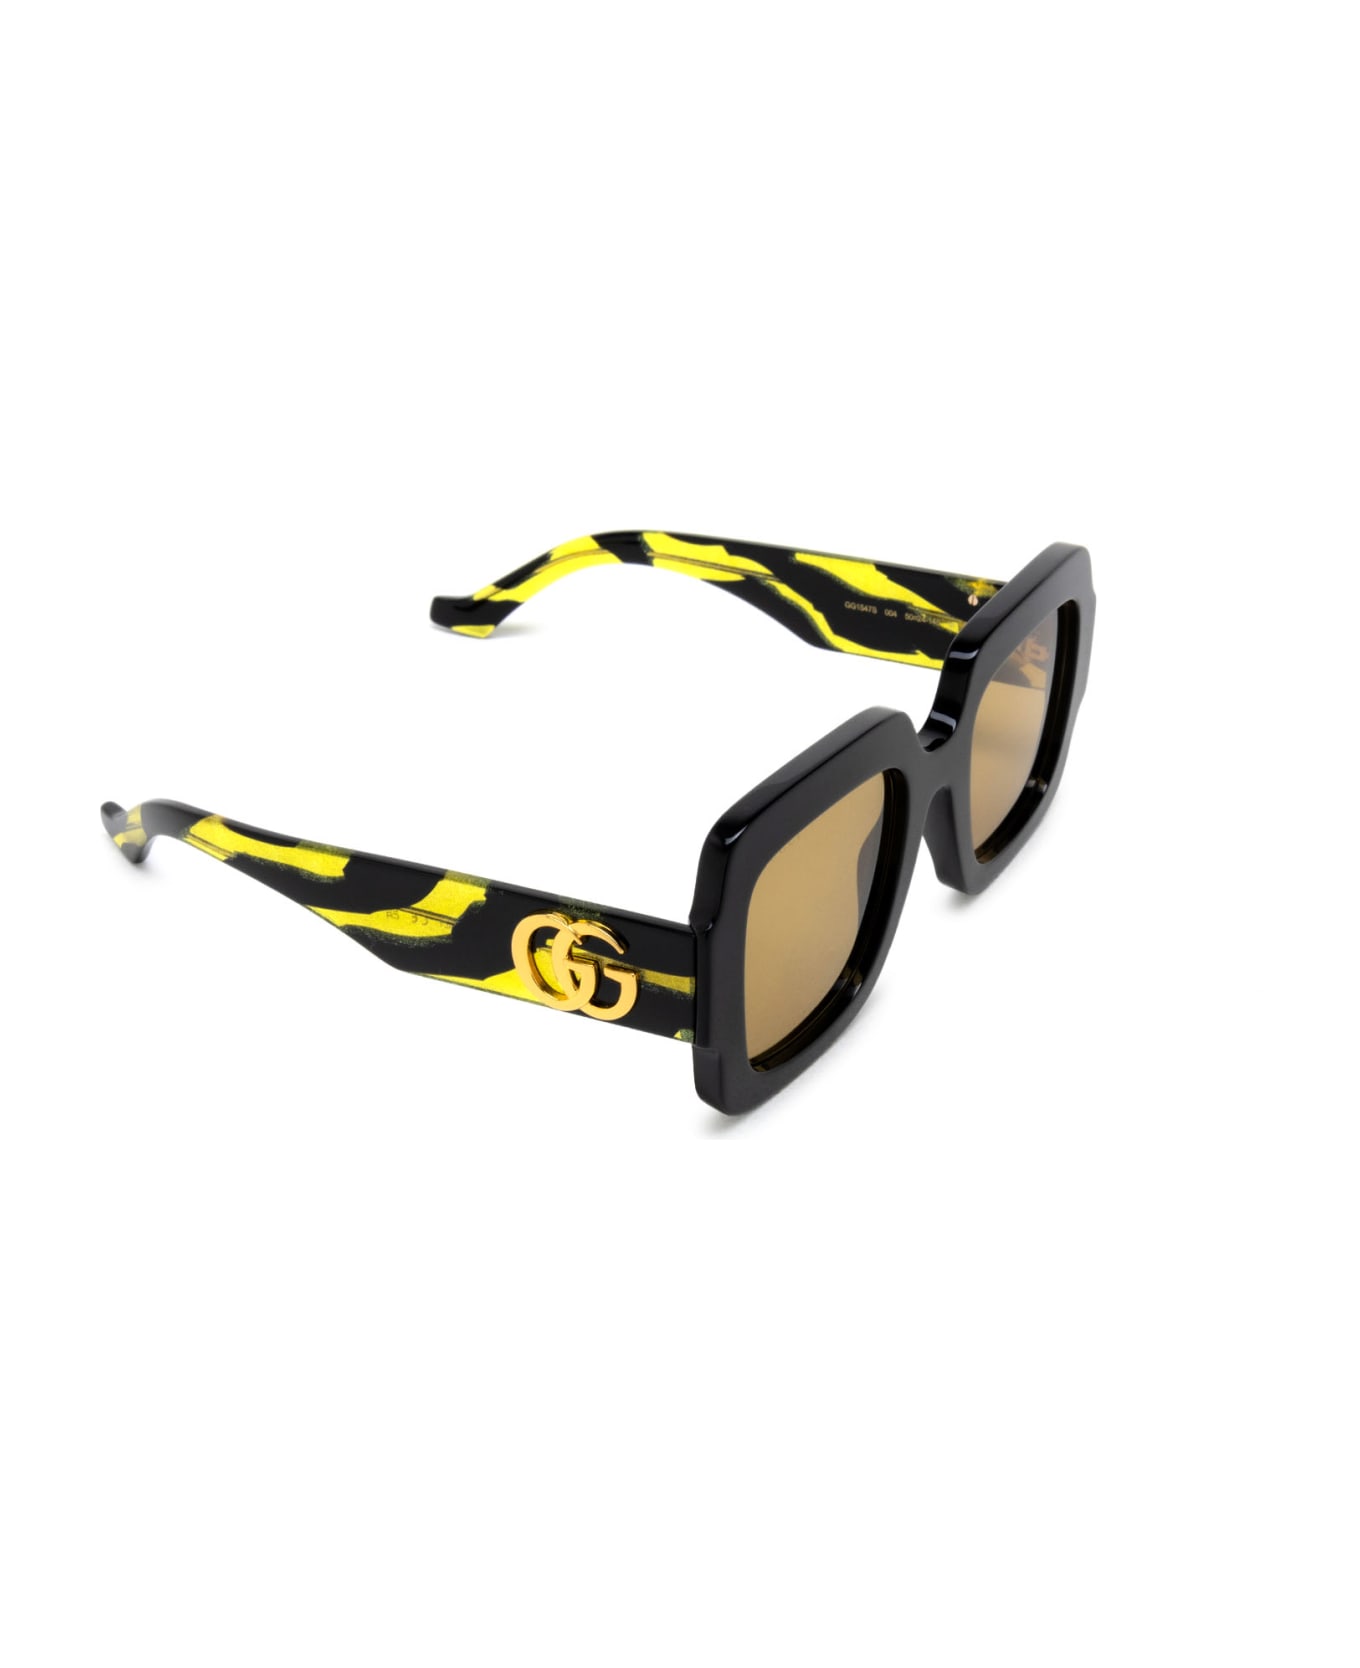 Gucci Eyewear Gg1547s Black Sunglasses - Black